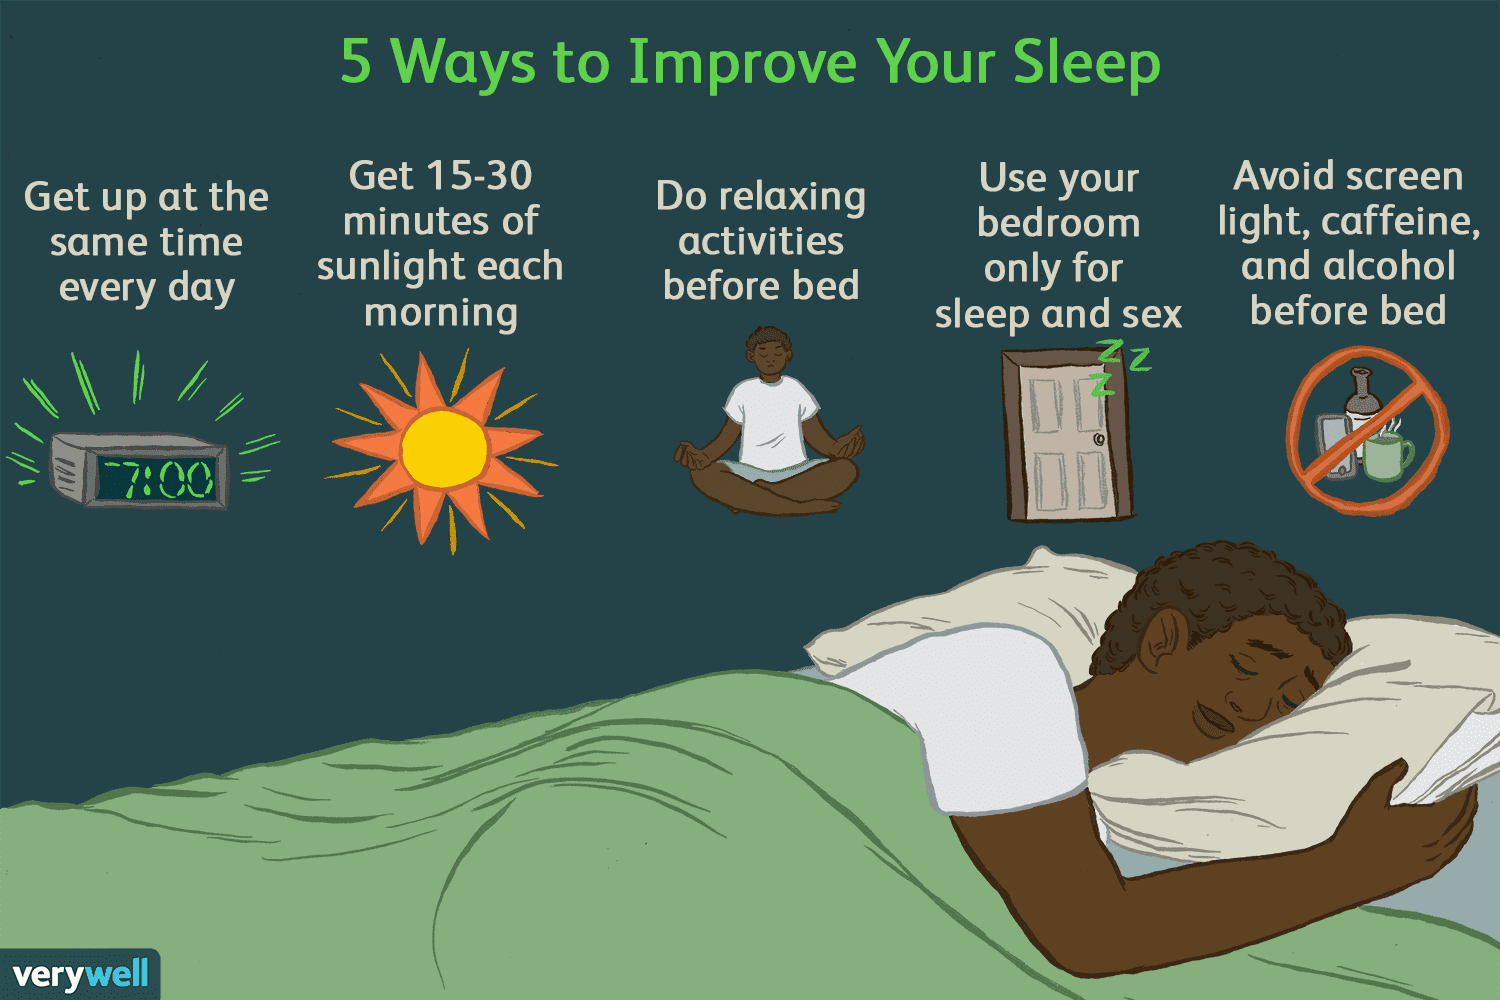 Tom go to bed. Улучшение сна. Best Sleep time. To improve Sleep. Иллюстрация как улучшить сон.